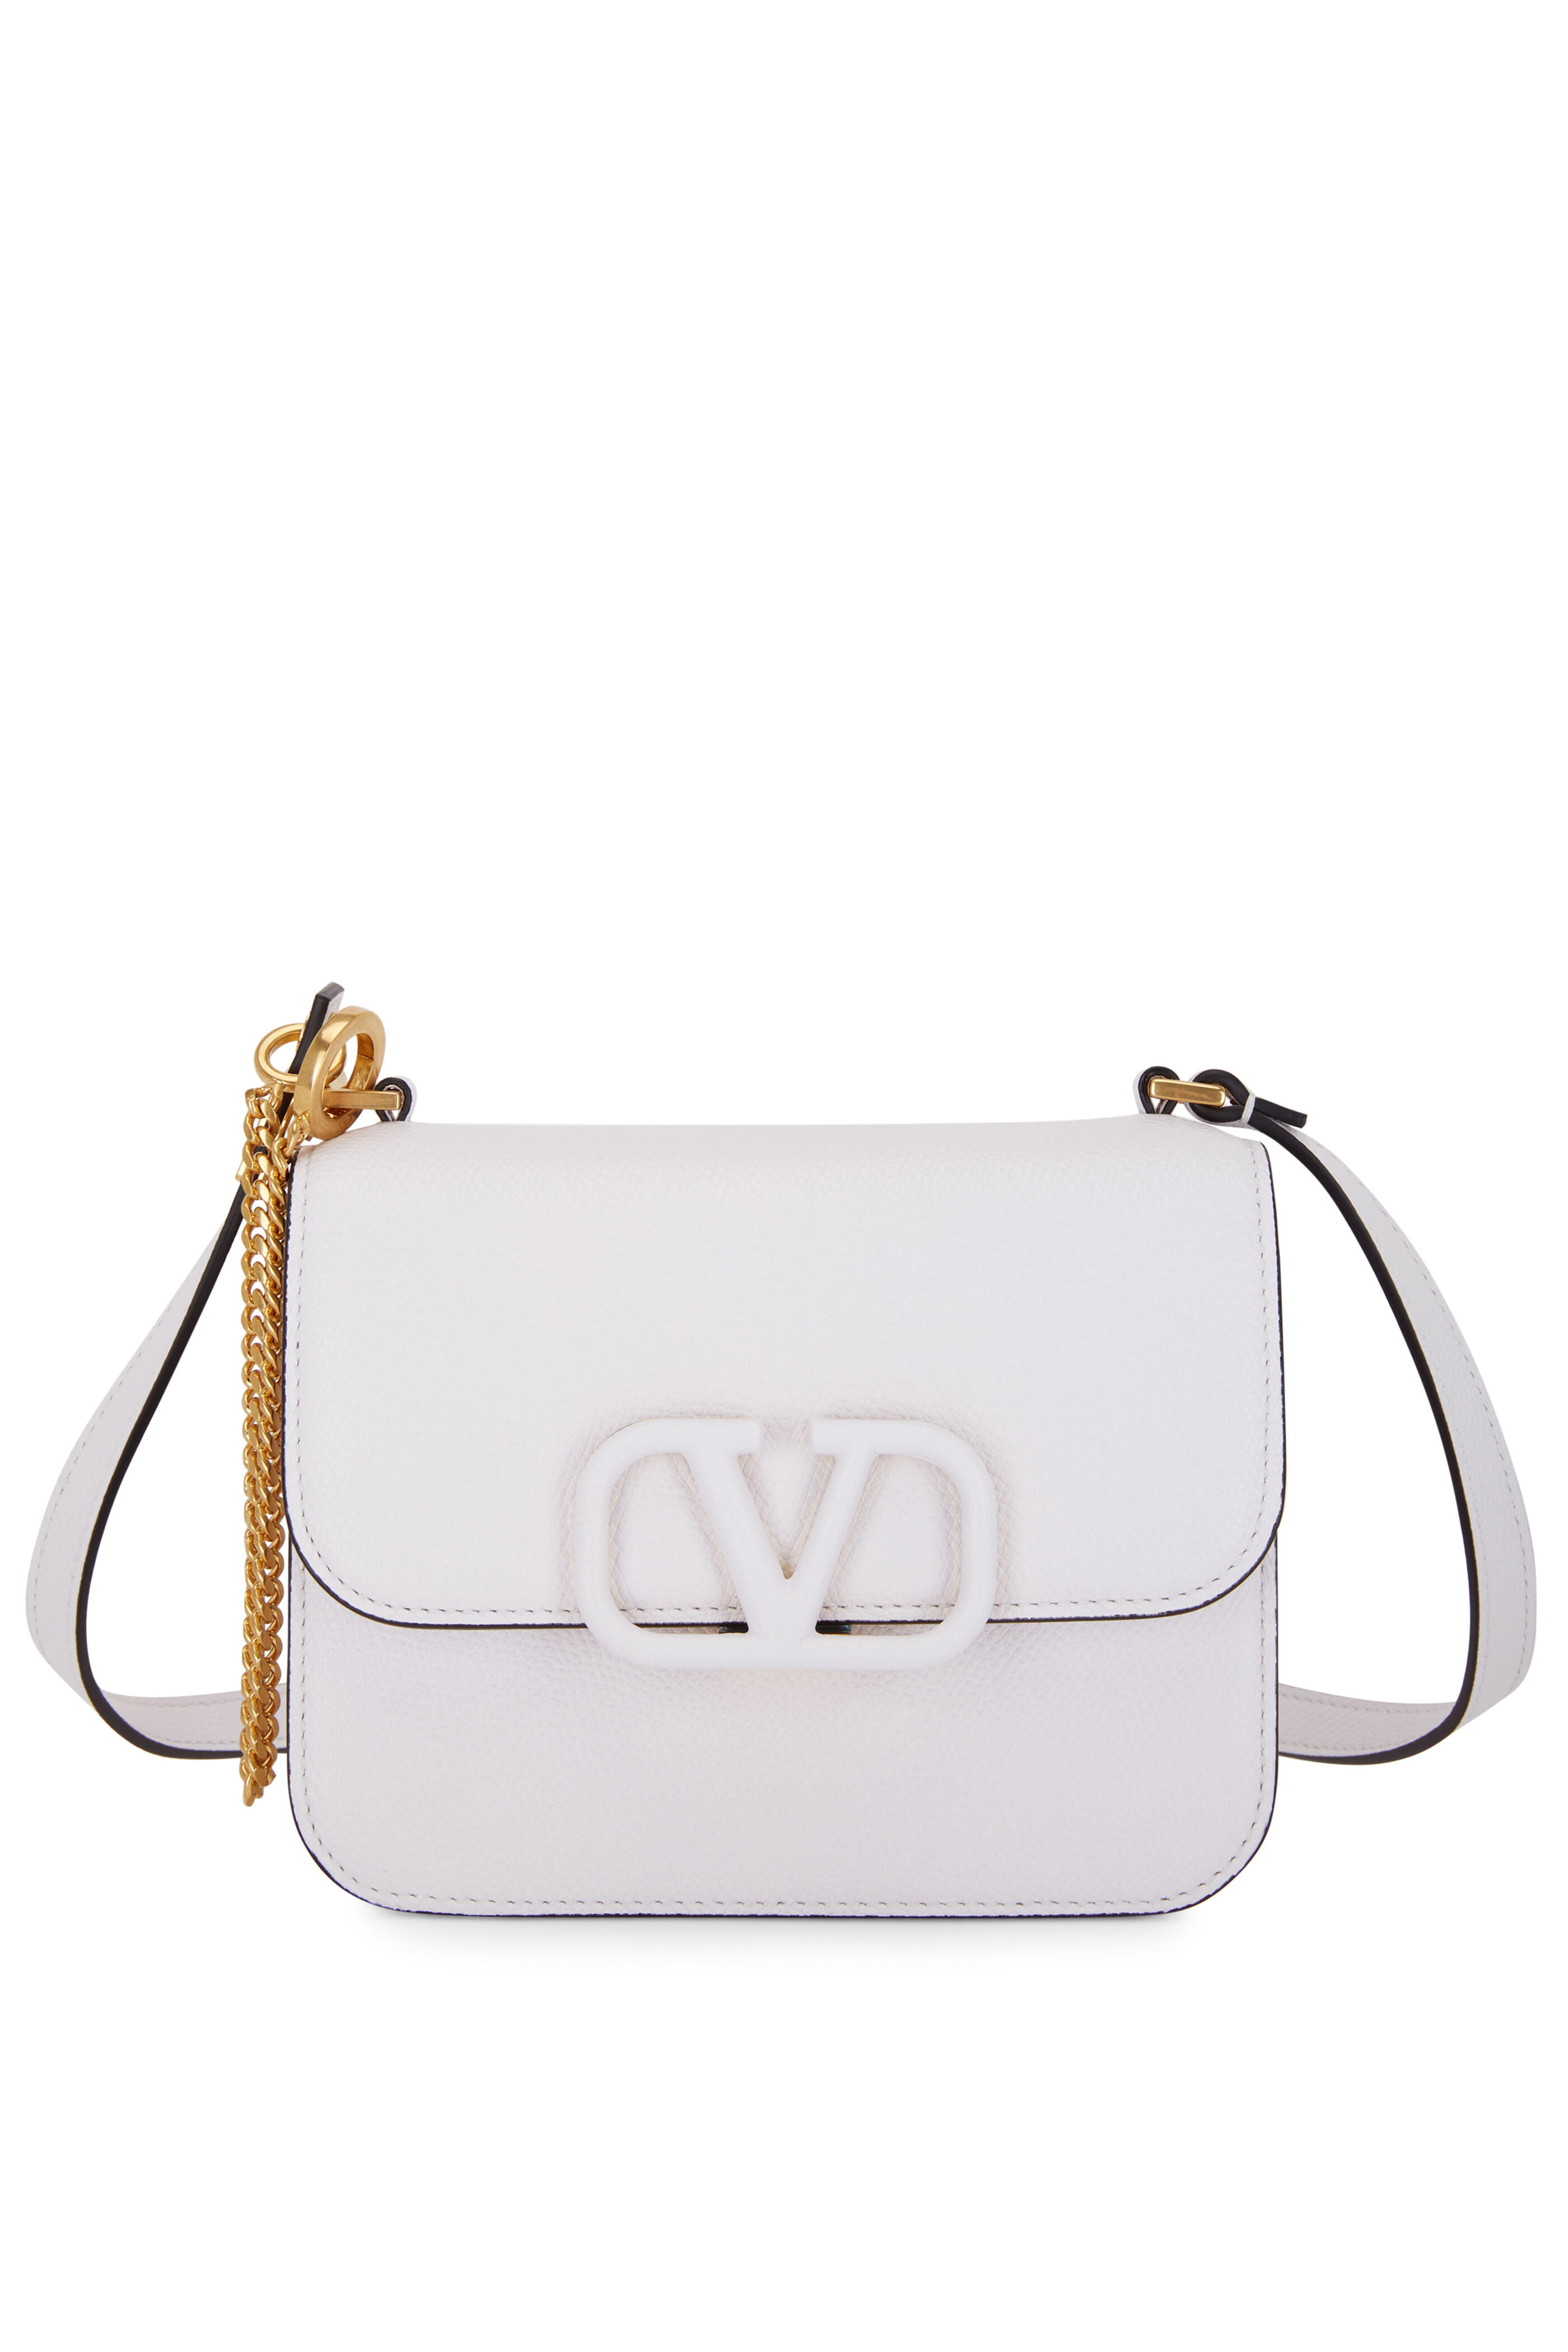 Valentino Garavani Garavani Medium Vsling Leather Crossbody Bag In Optic  White